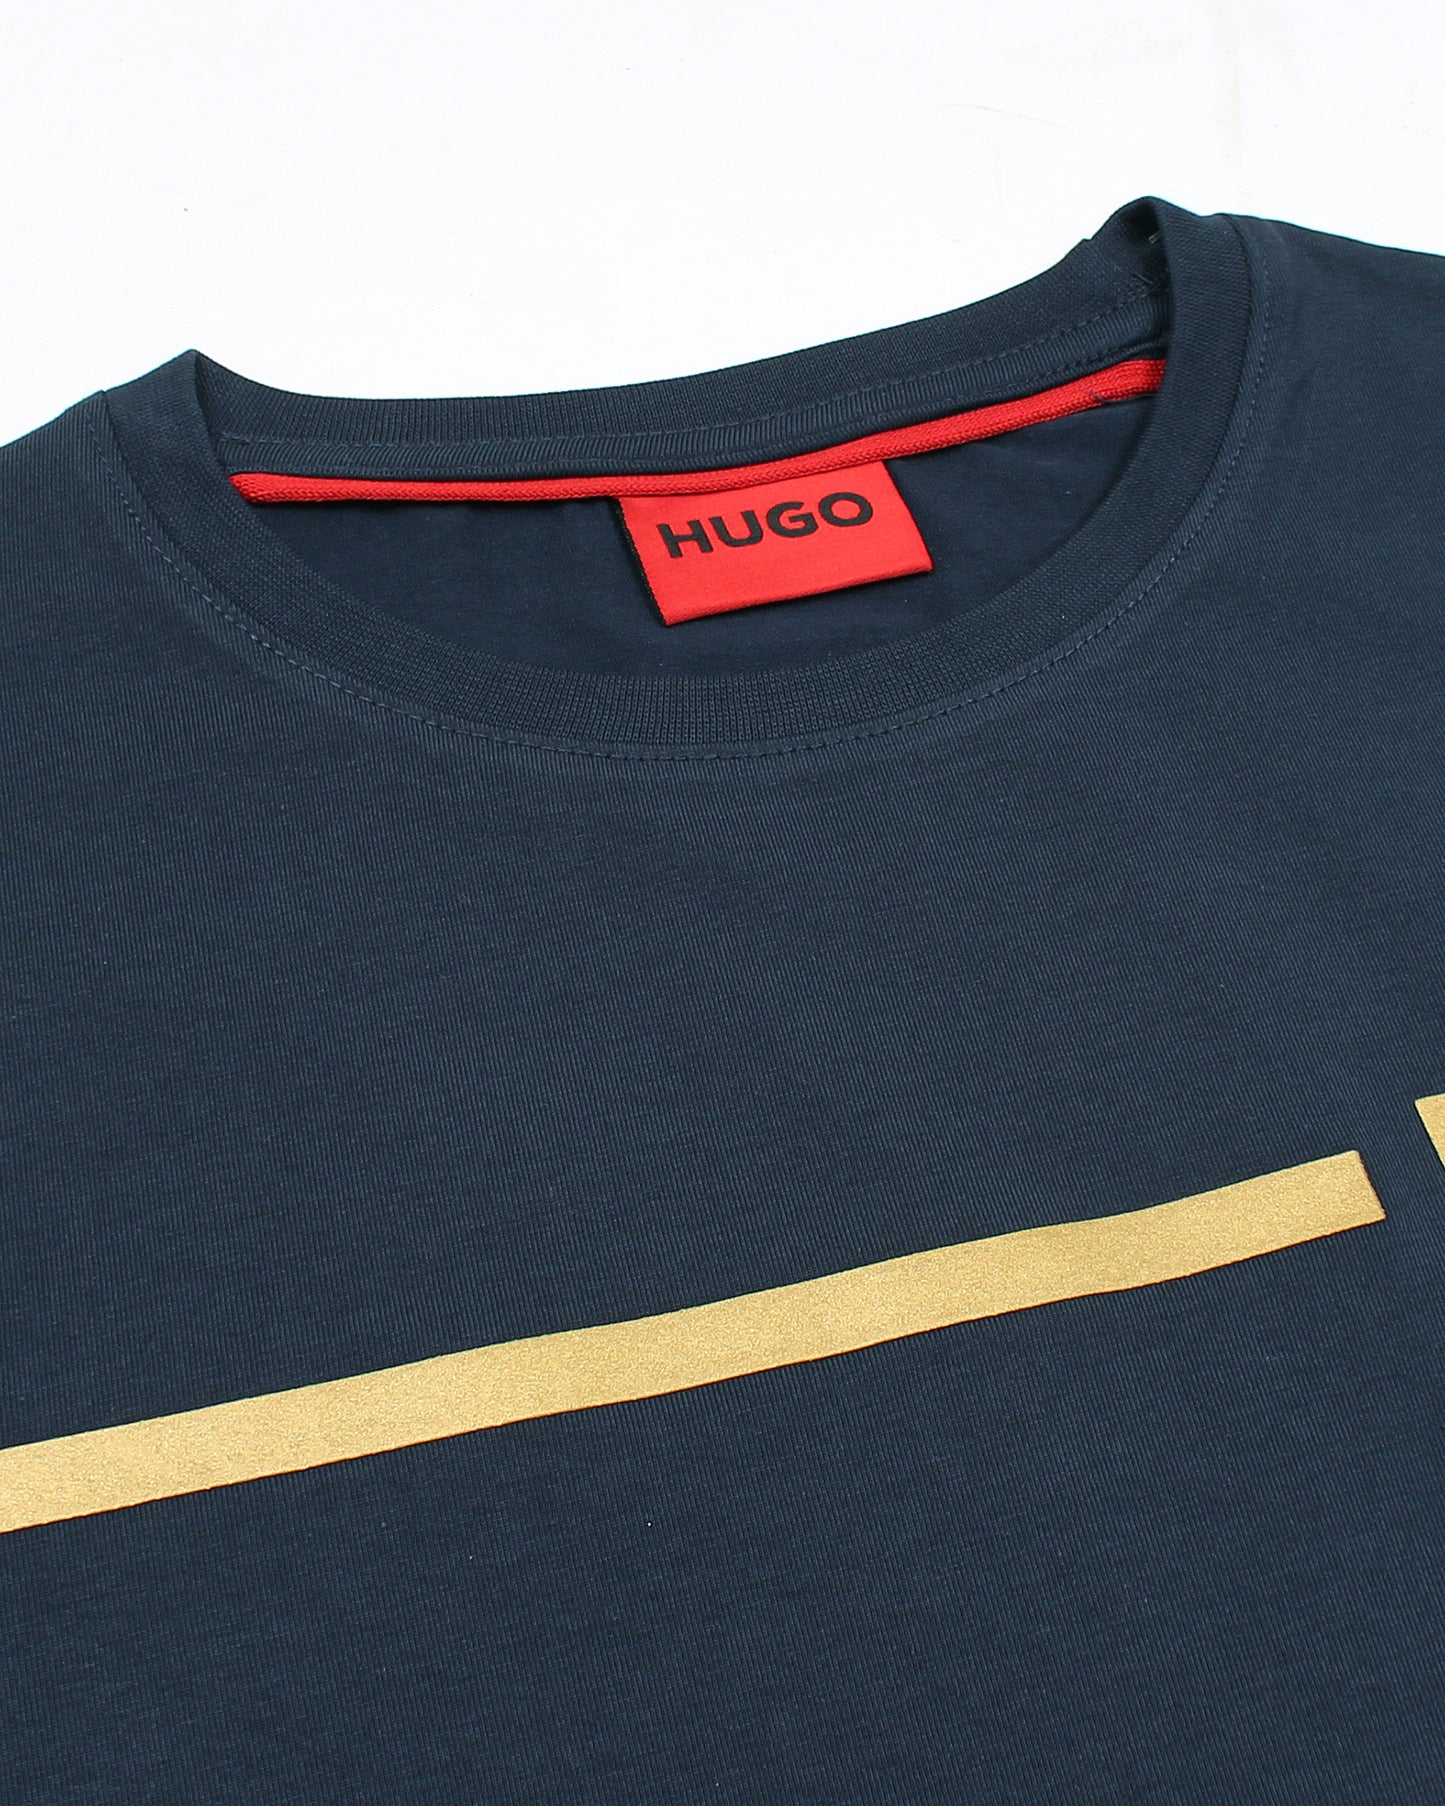 Exclusive Hu/go Crew Neck Shirt - Navy Blue